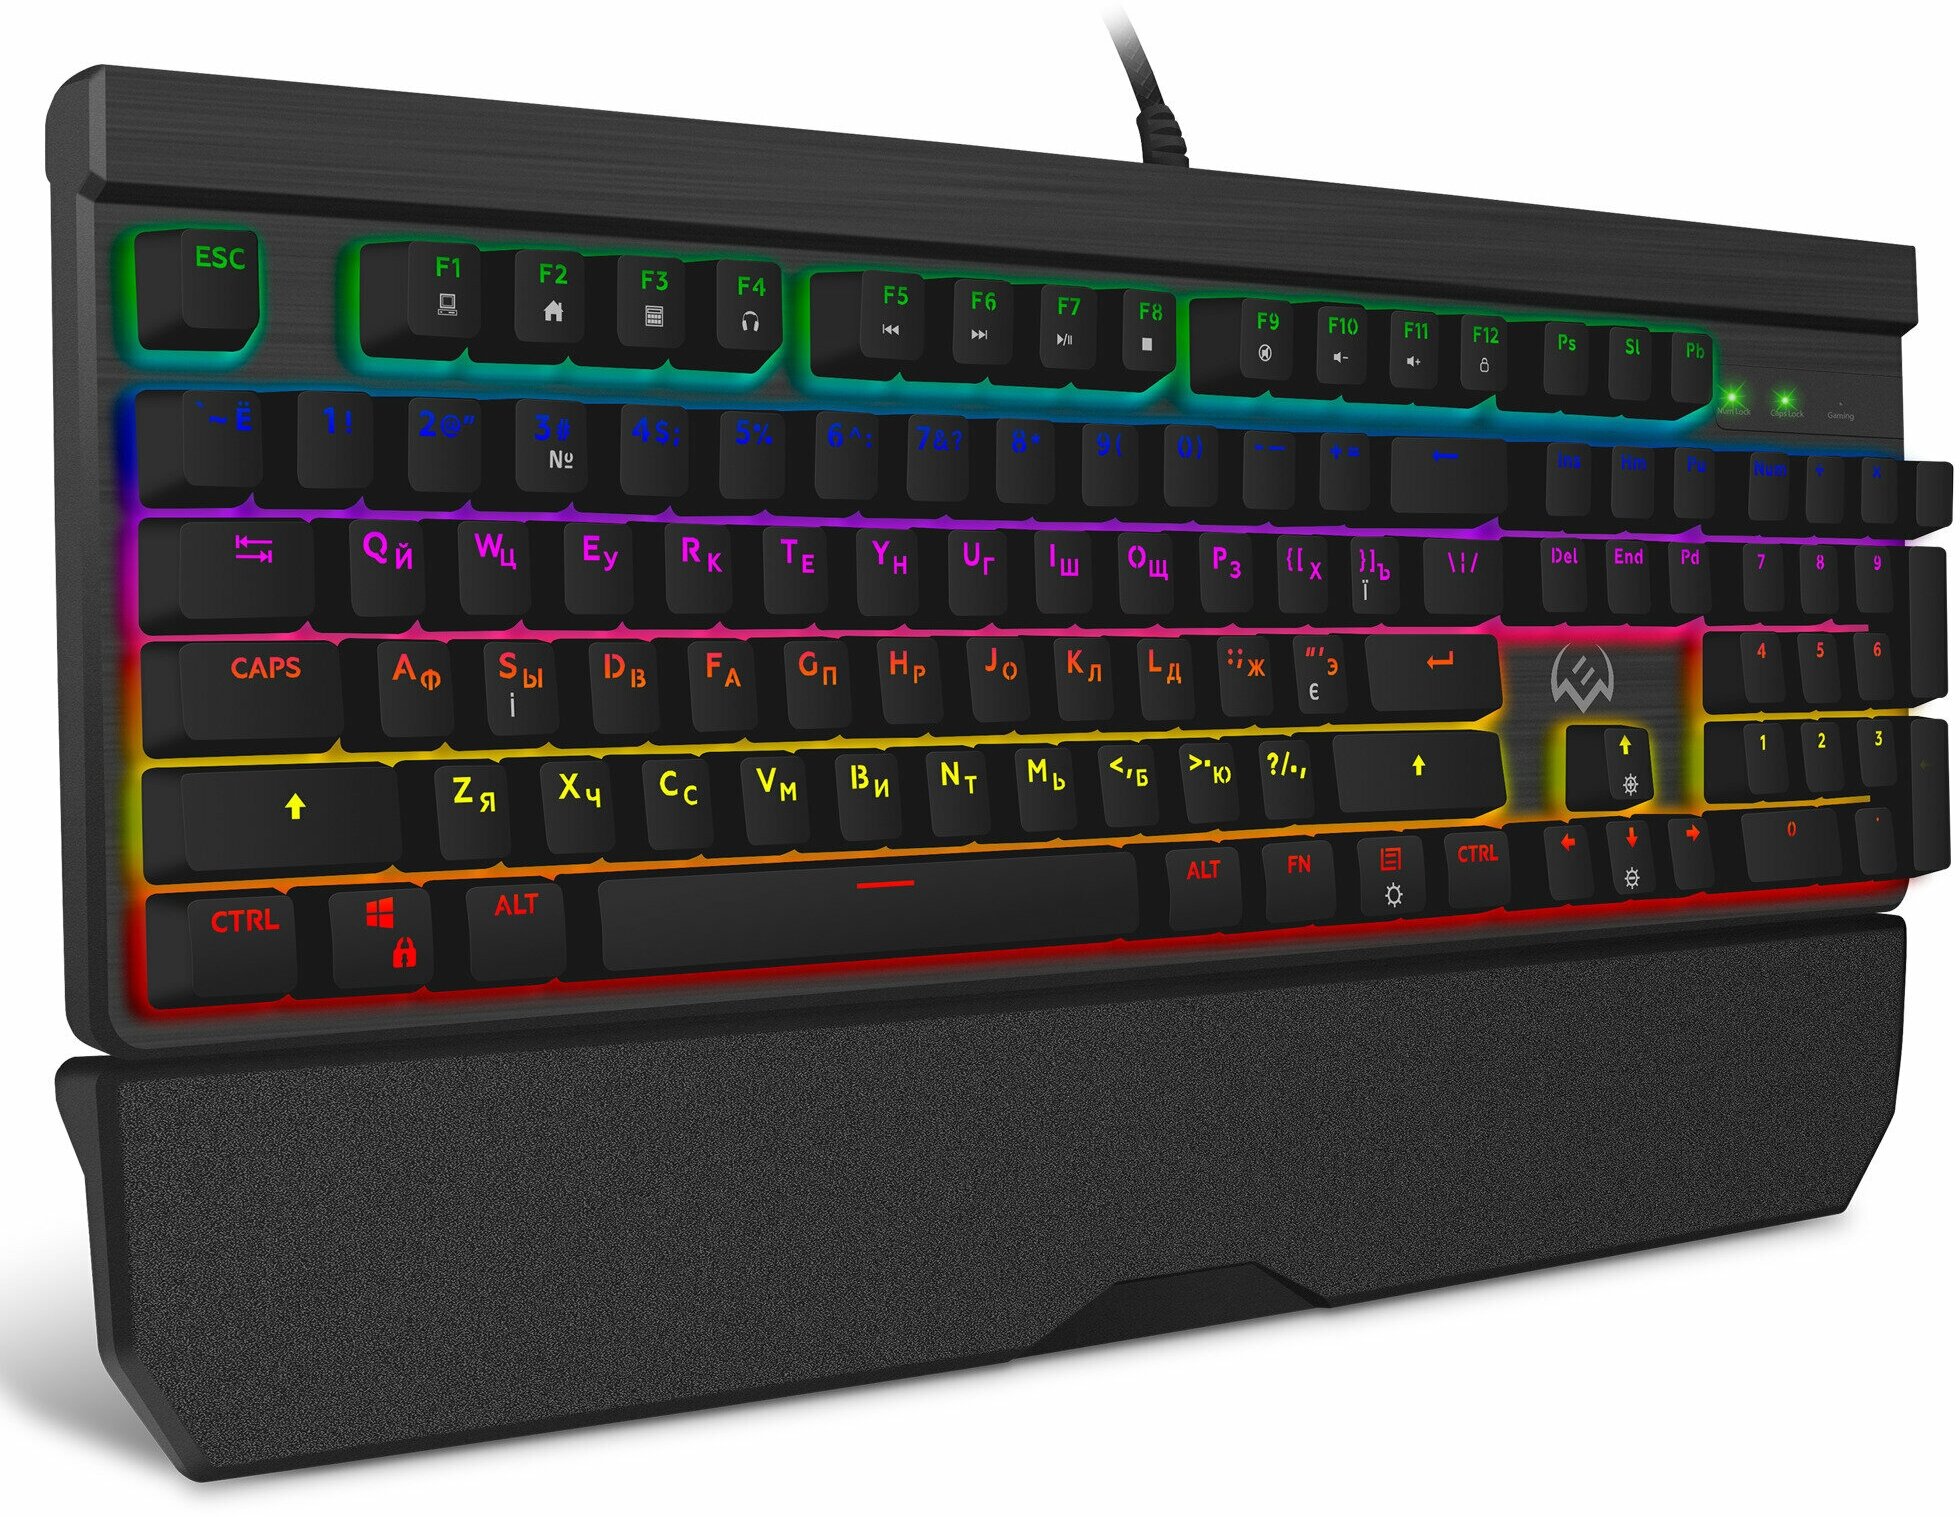 Клавиатура SVEN KB-G9500